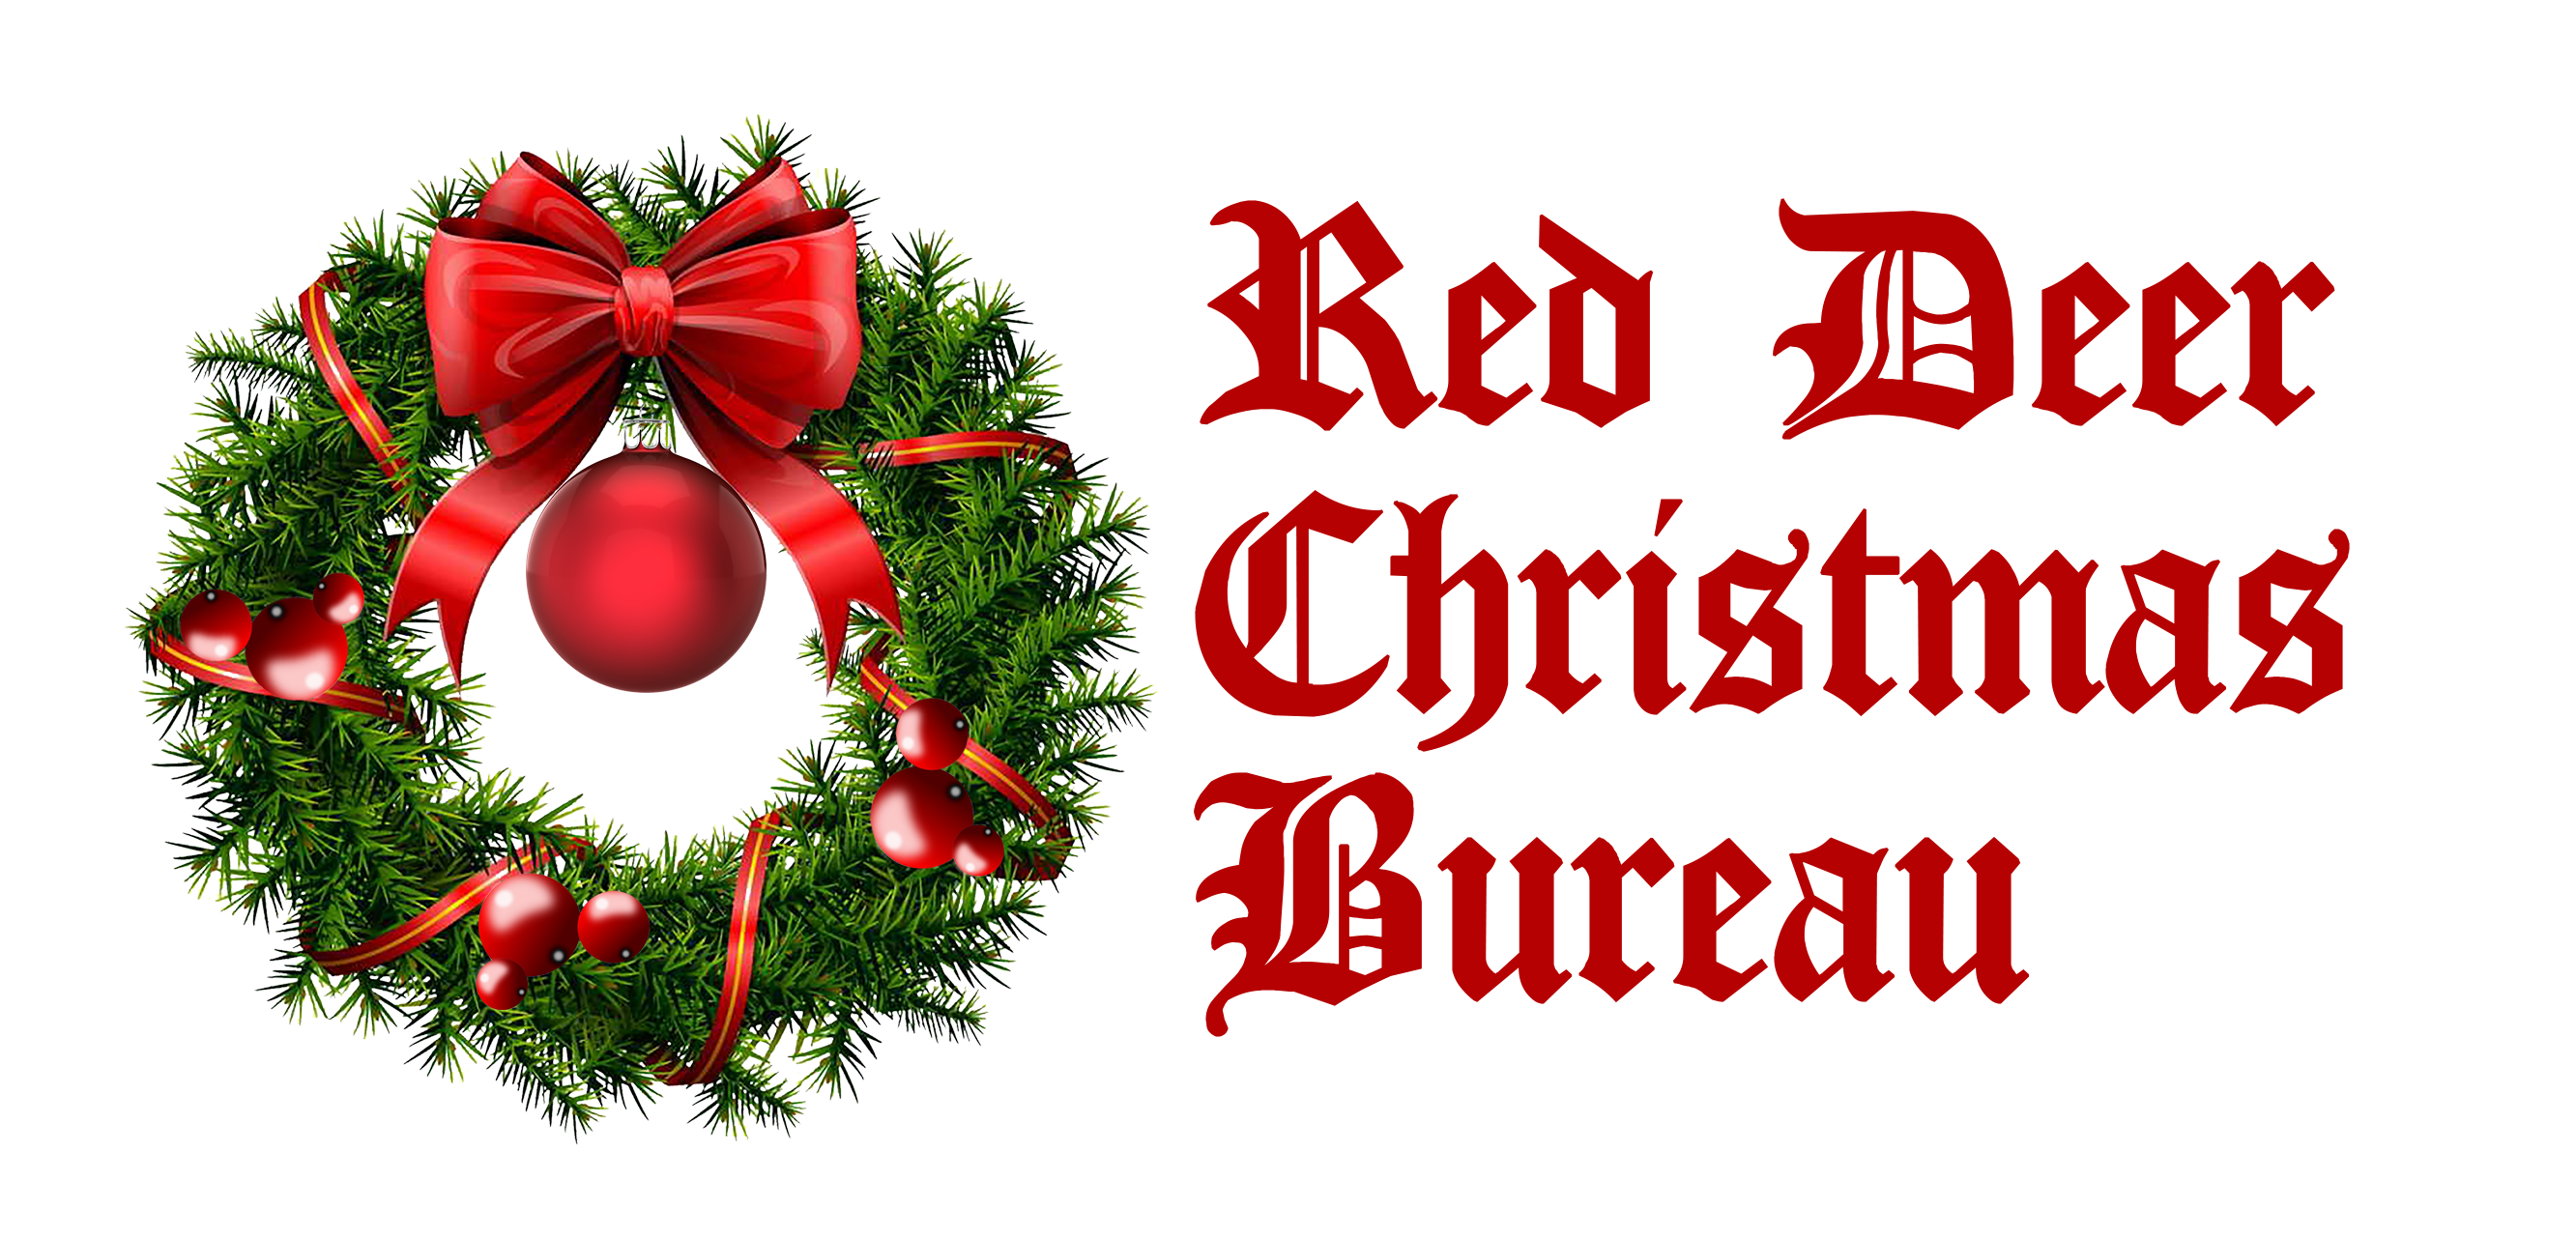 Red Deer Christmas Bureau Logo